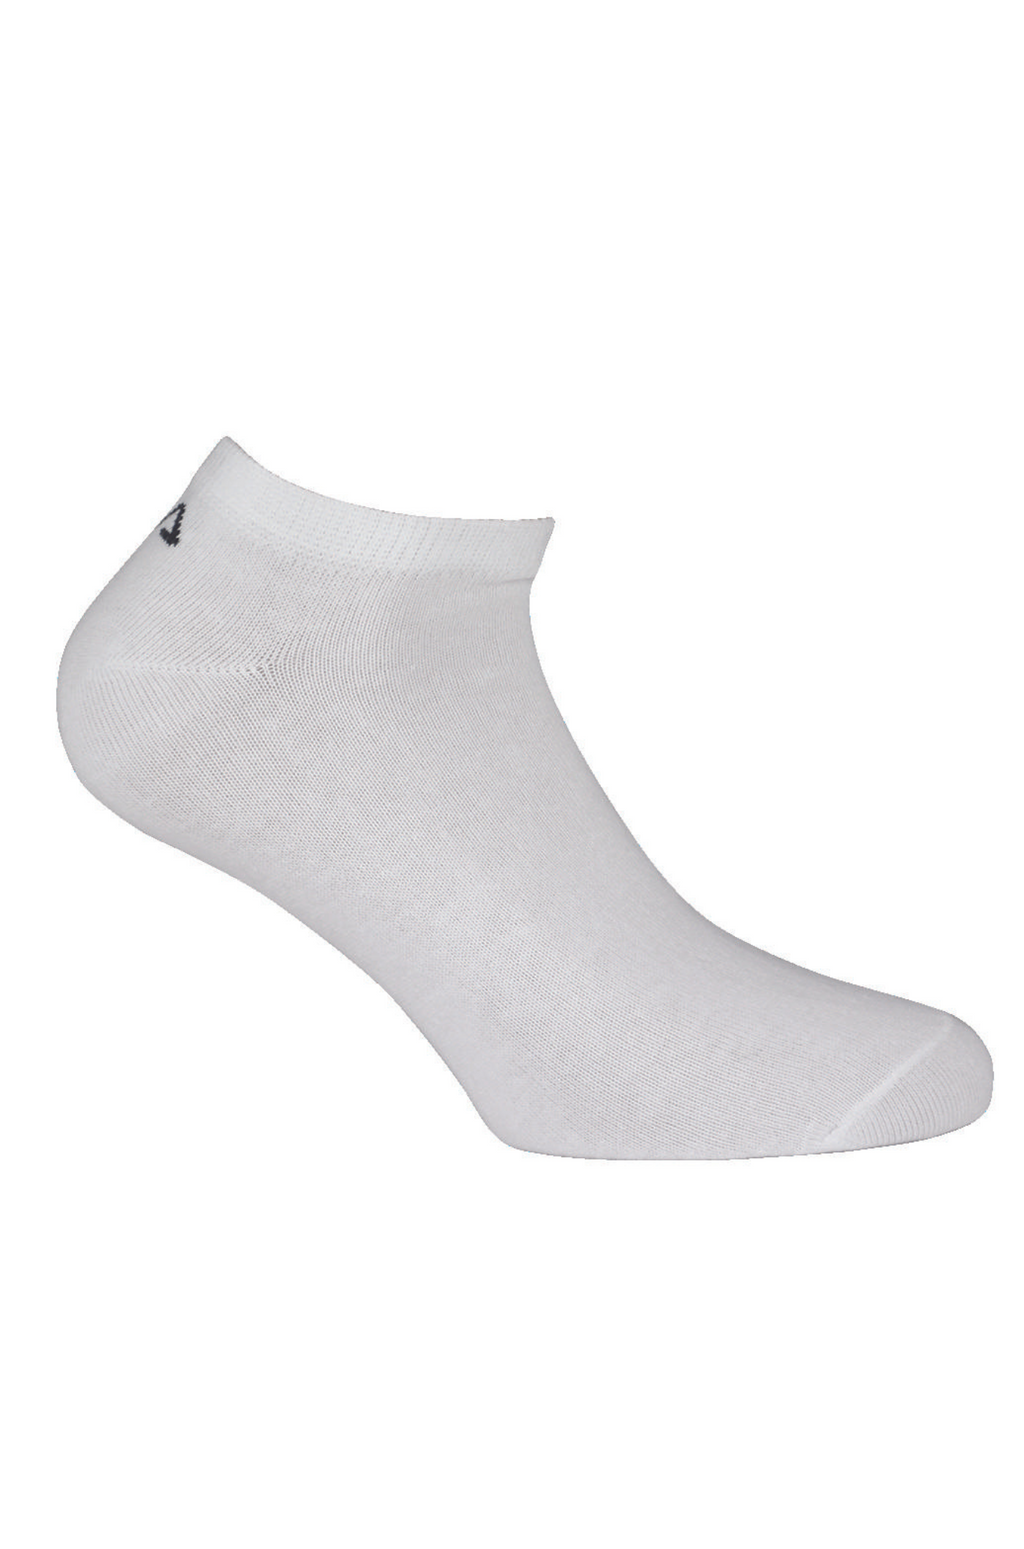 Fila Invisible Socks 6 Pairs Pack White